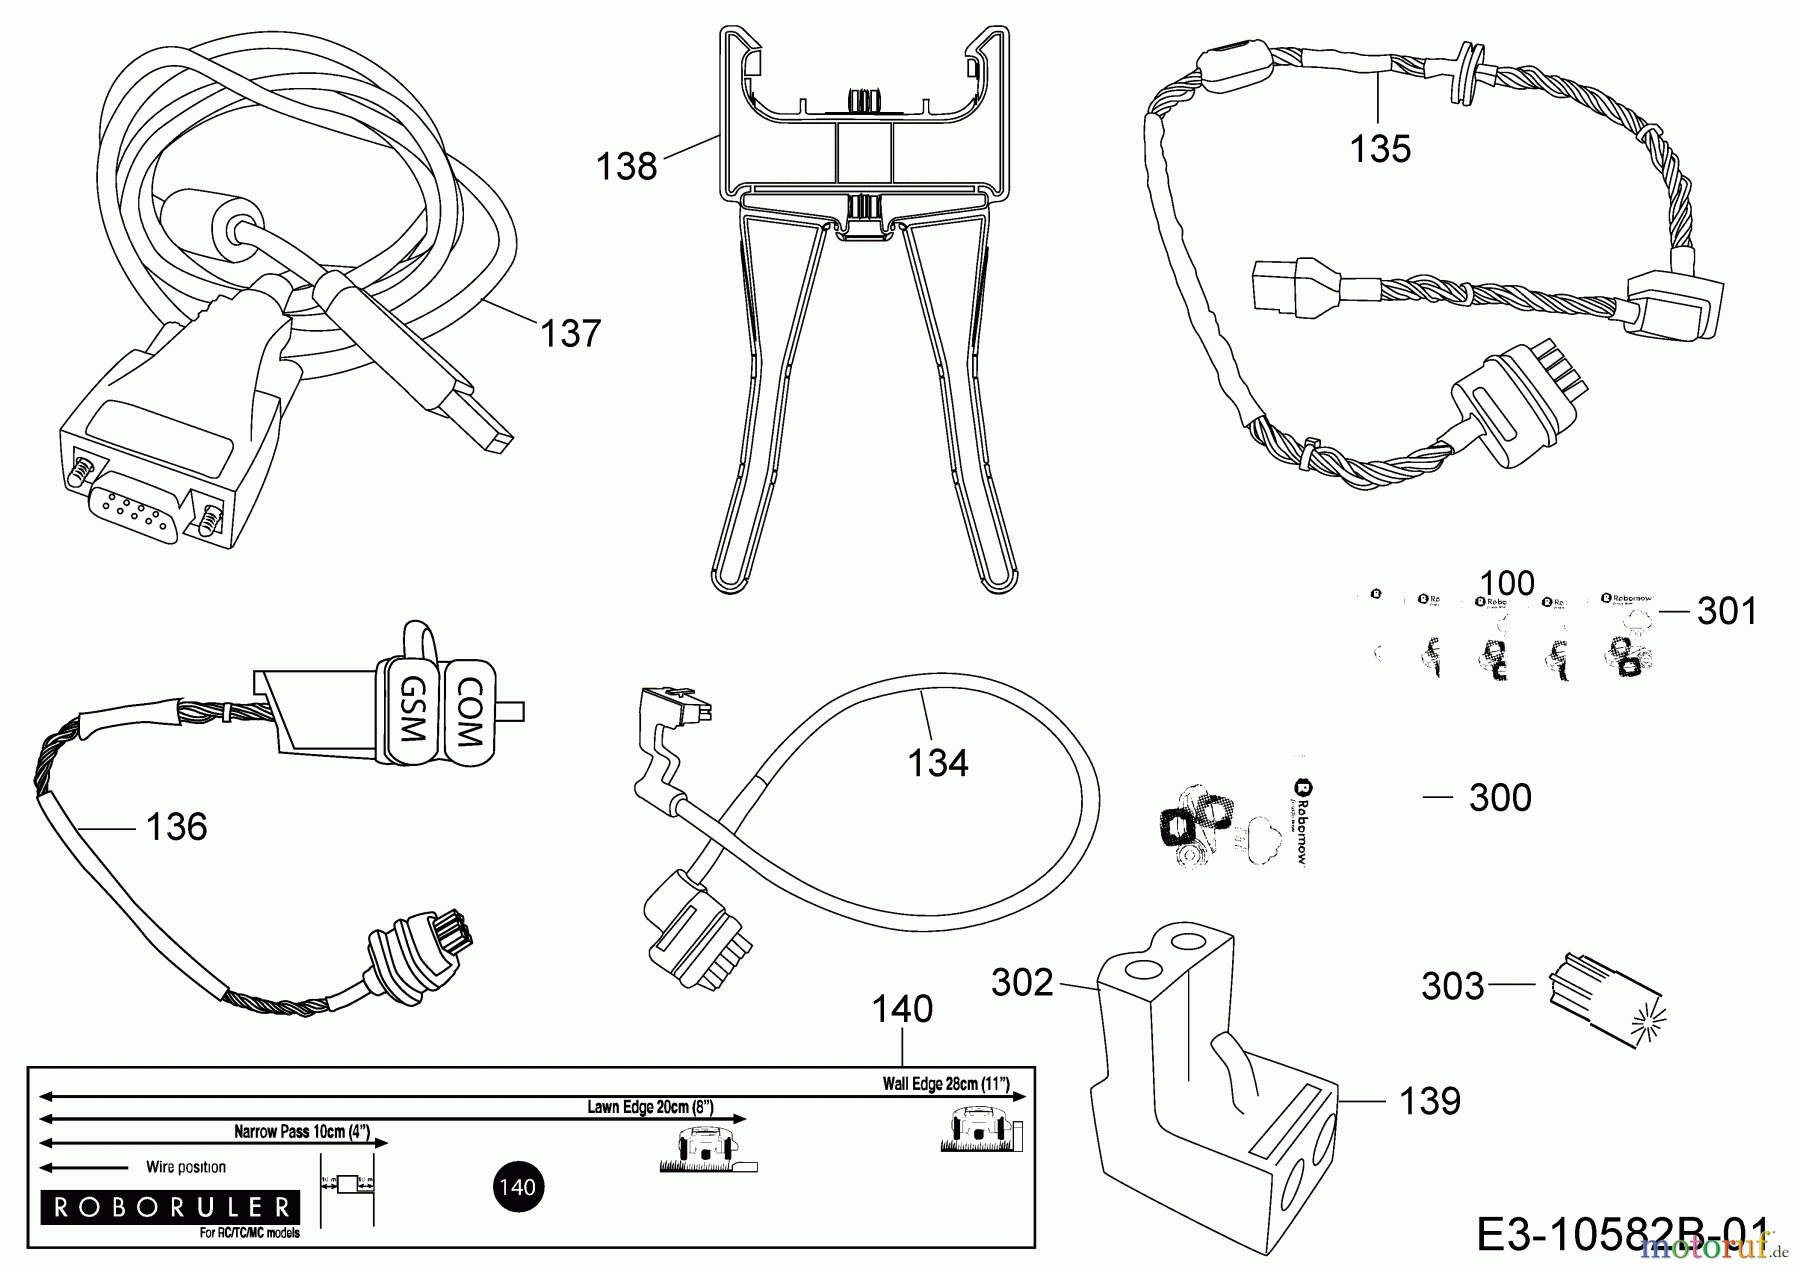  Robomow Mähroboter RC312 PRO S (White) PRD7012W  (2017) Kabel, Kabelanschluß, Regensensor, Werkzeug